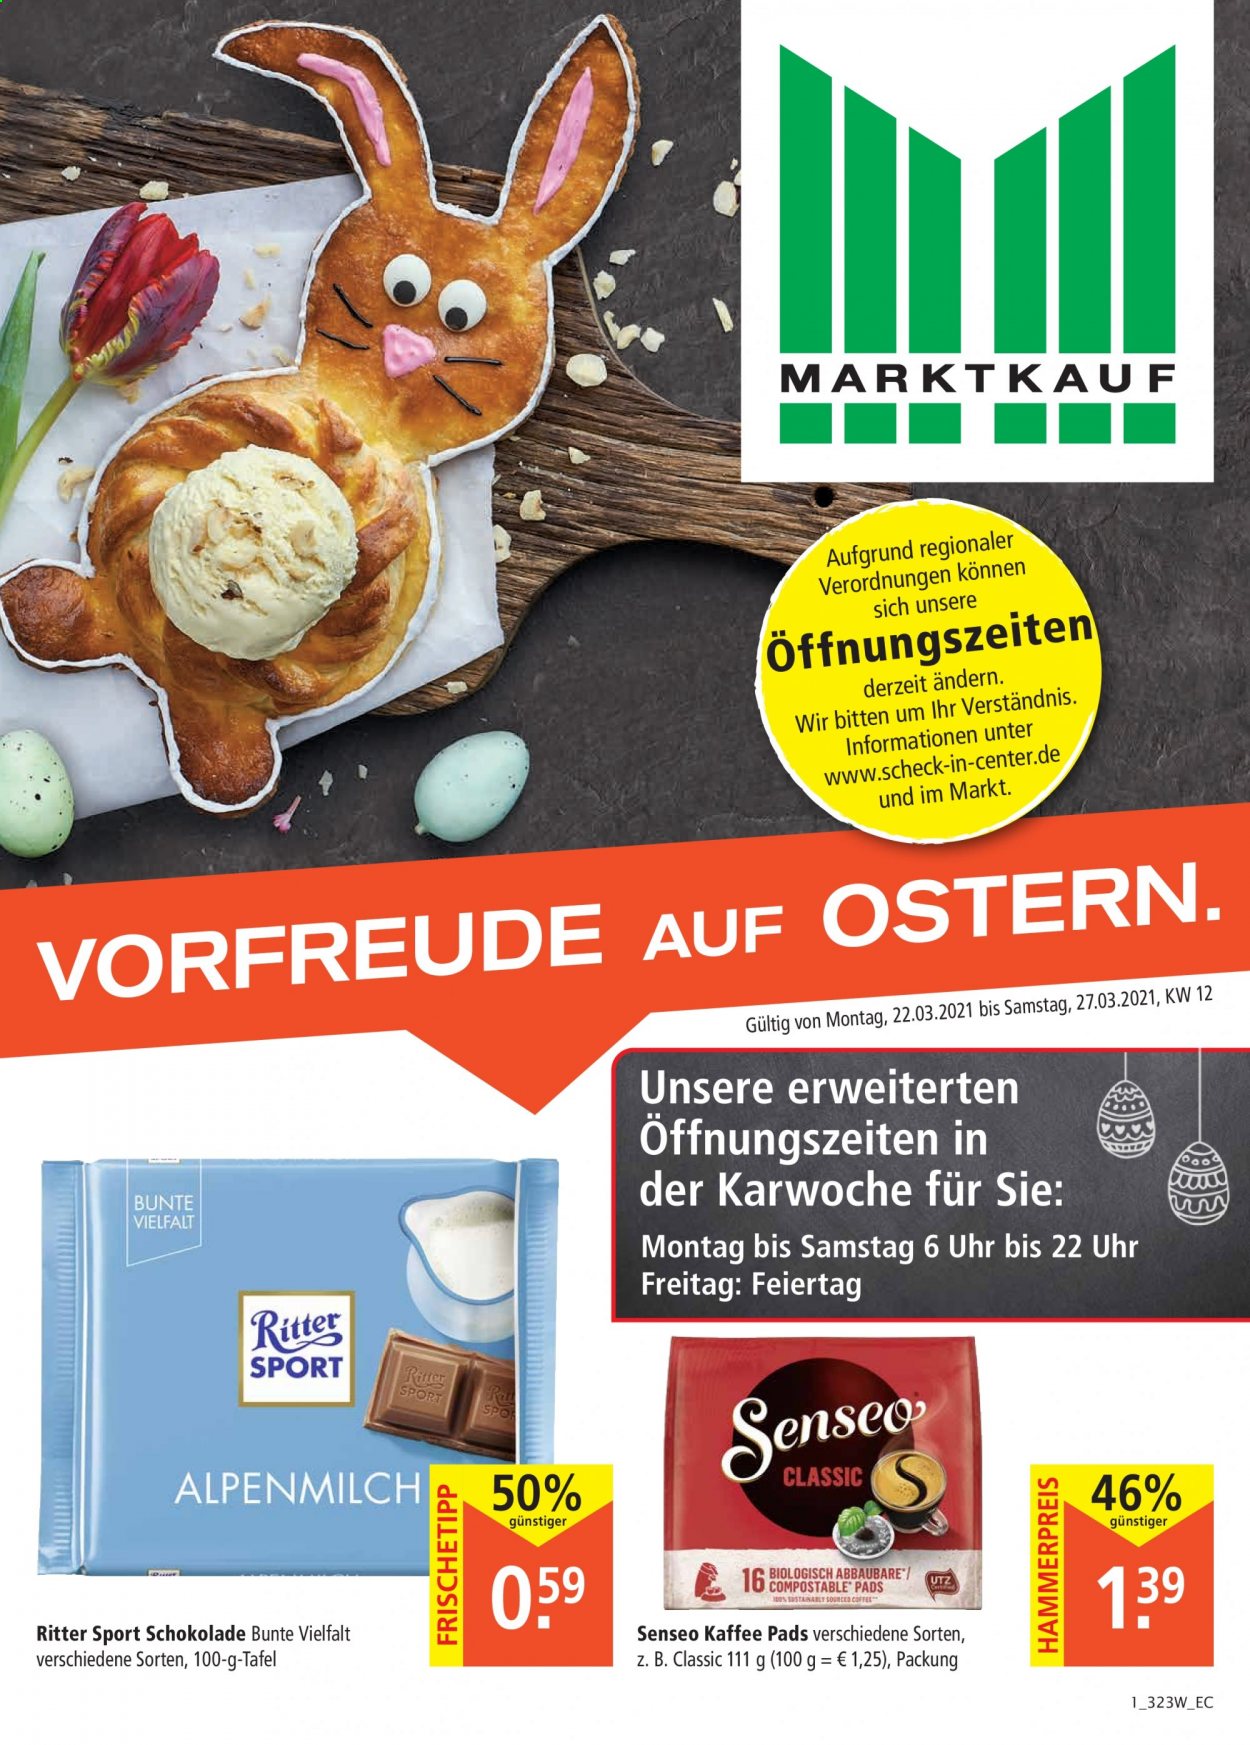 thumbnail - Prospekte Marktkauf - 22.03.2021 - 27.03.2021 - Produkte in Aktion - Schokolade, Ritter Sport, Kaffee, Senseo. Seite 1.